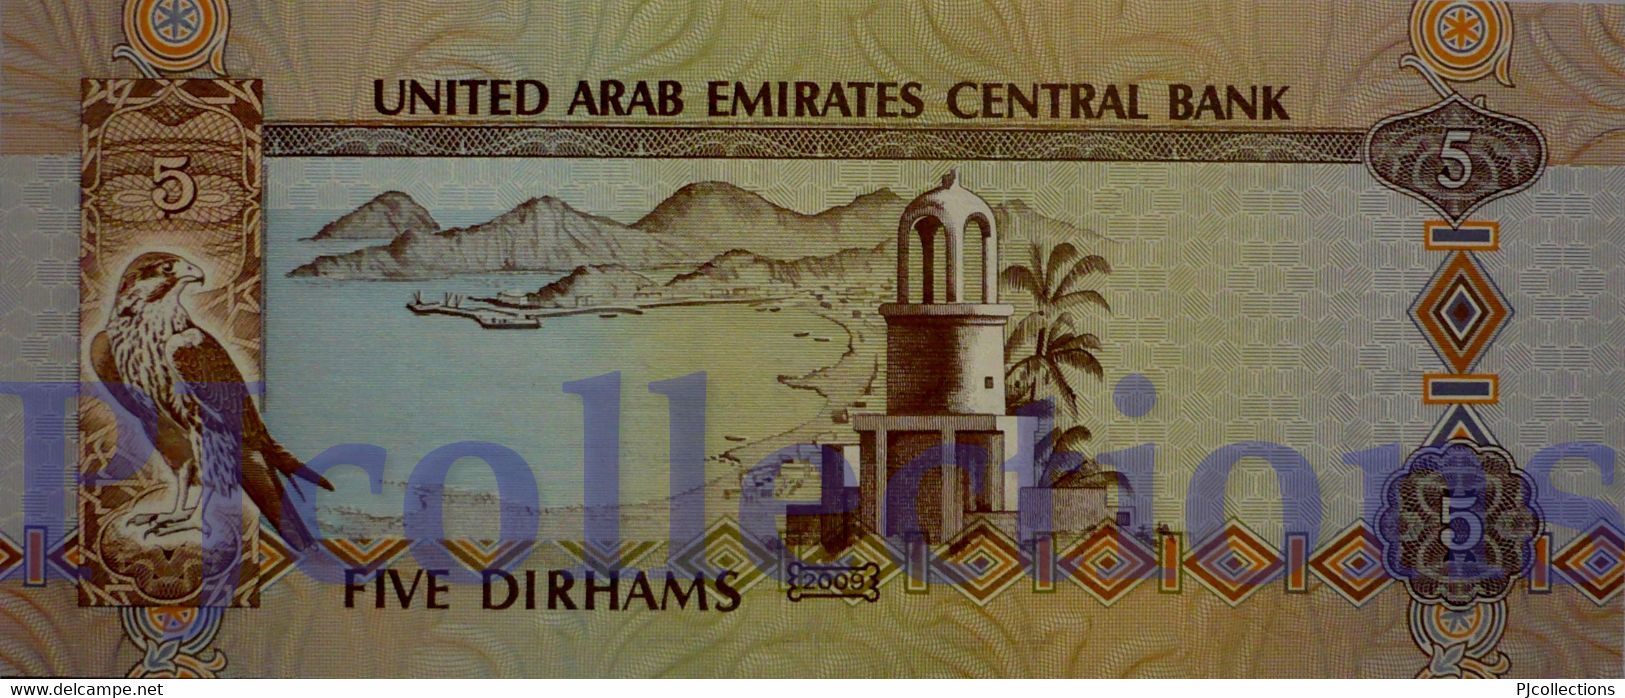 LOT UNITED ARAB EMIRATES 5 DIRHAMS 2009 PICK 26a UNC X 5 PCS - United Arab Emirates